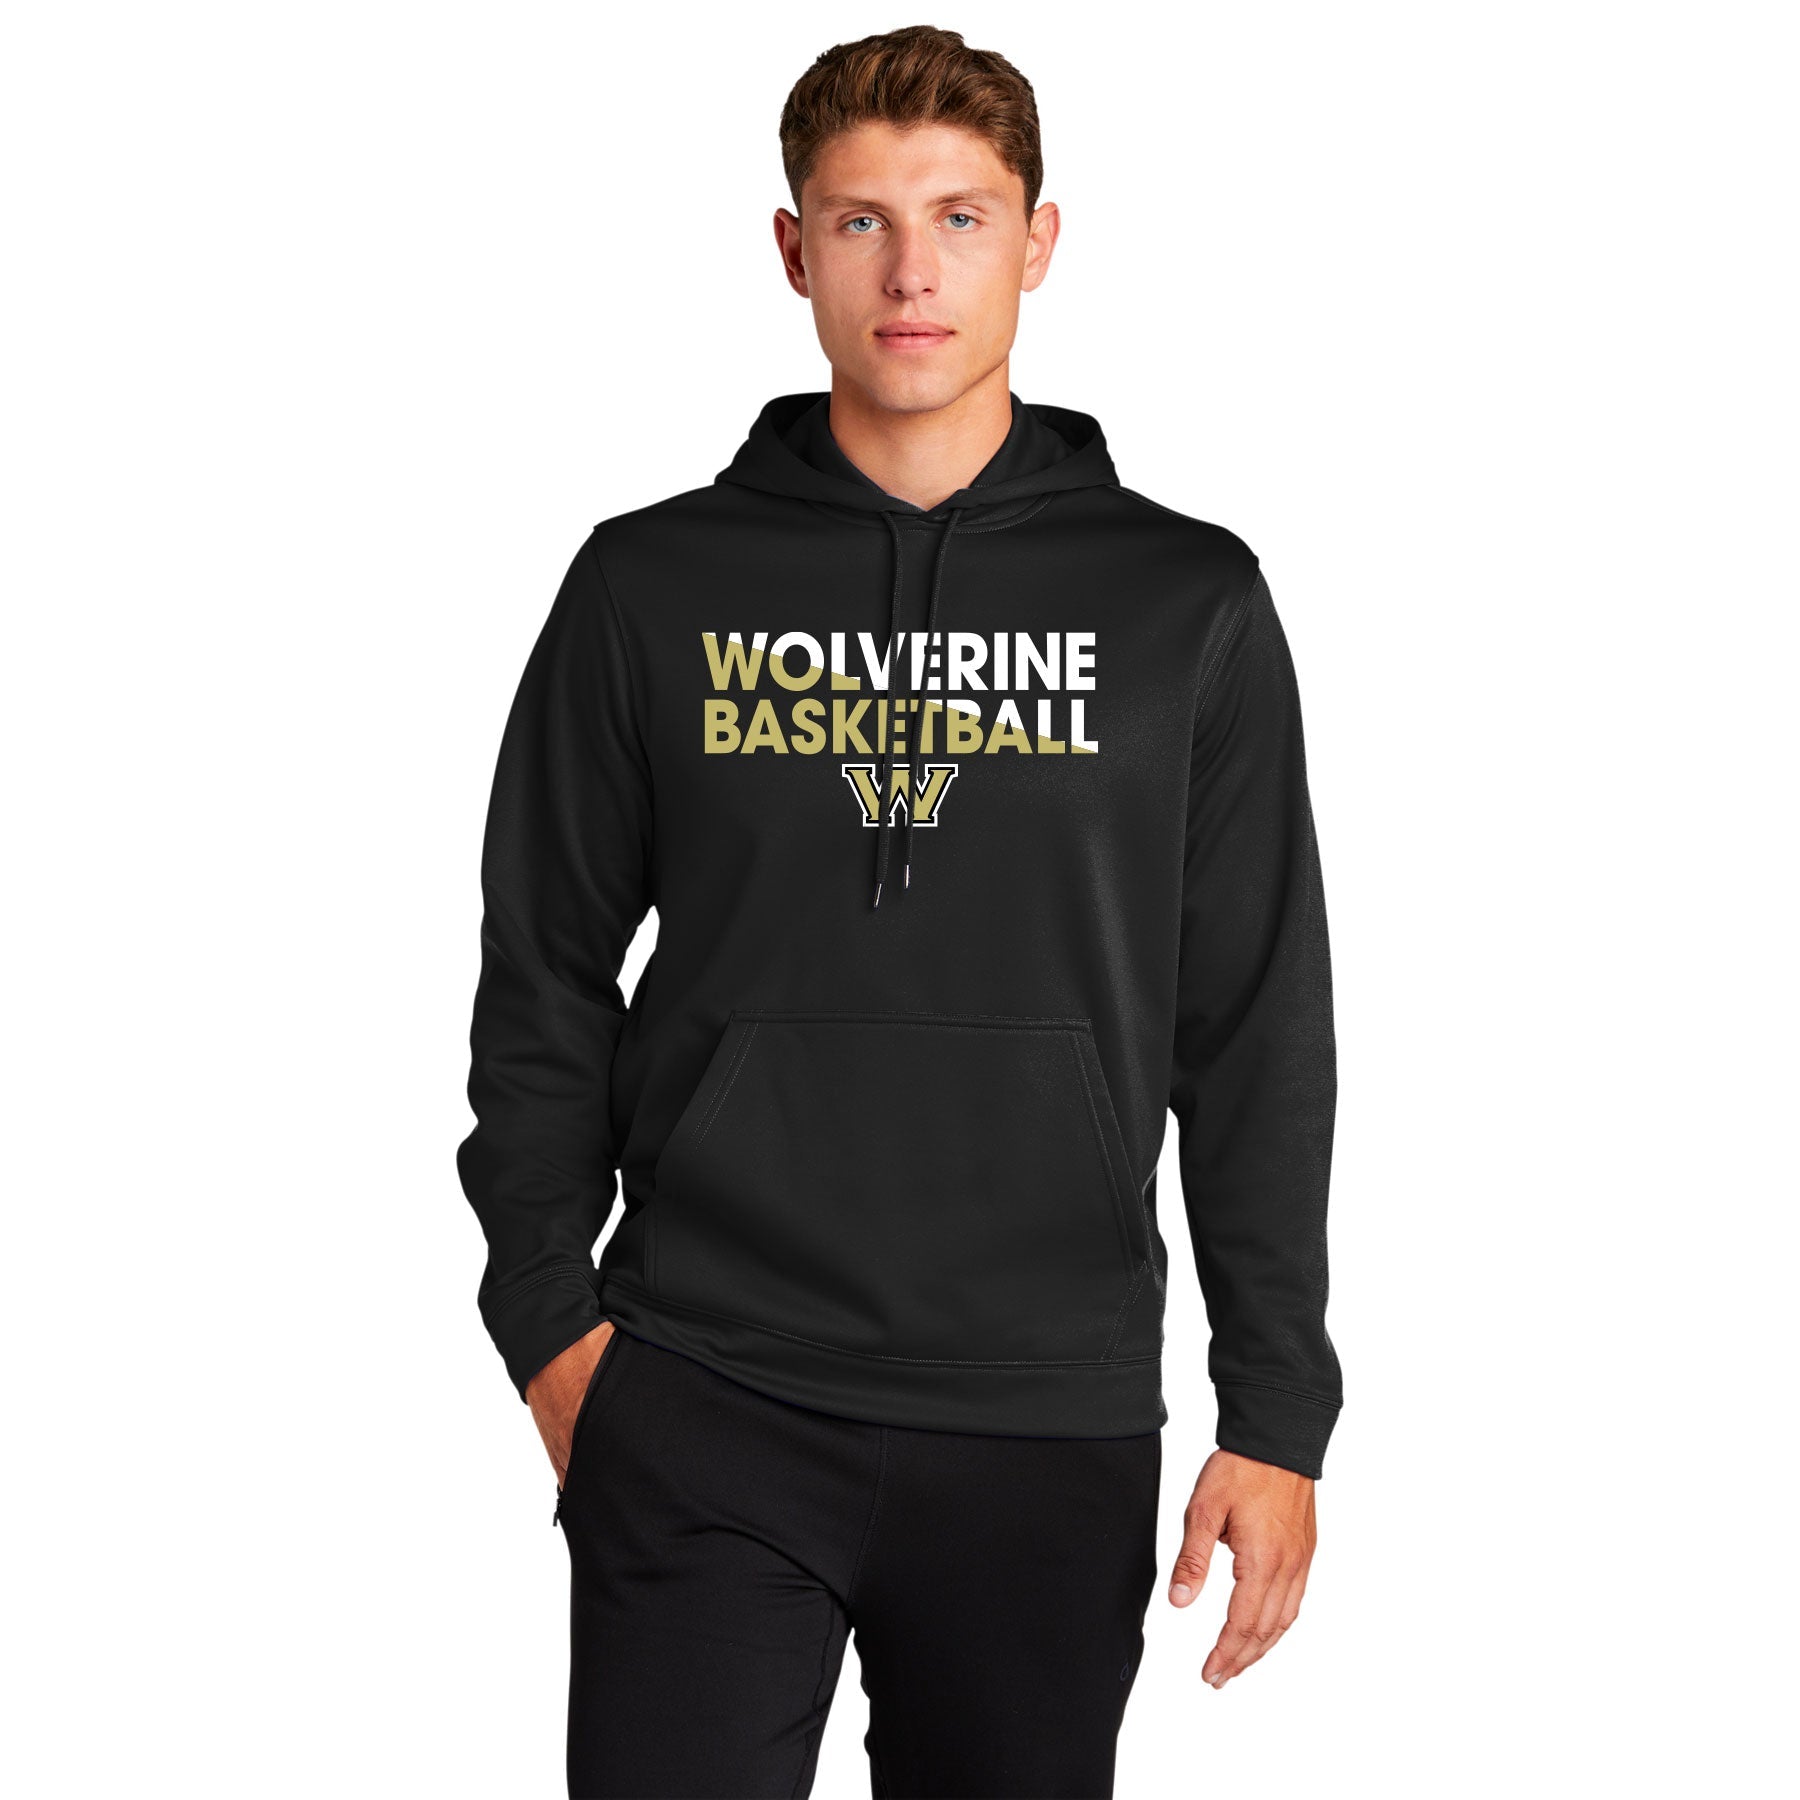 Wolverine Basketball Slice Sport-Wick Fleece Hooded Pullover